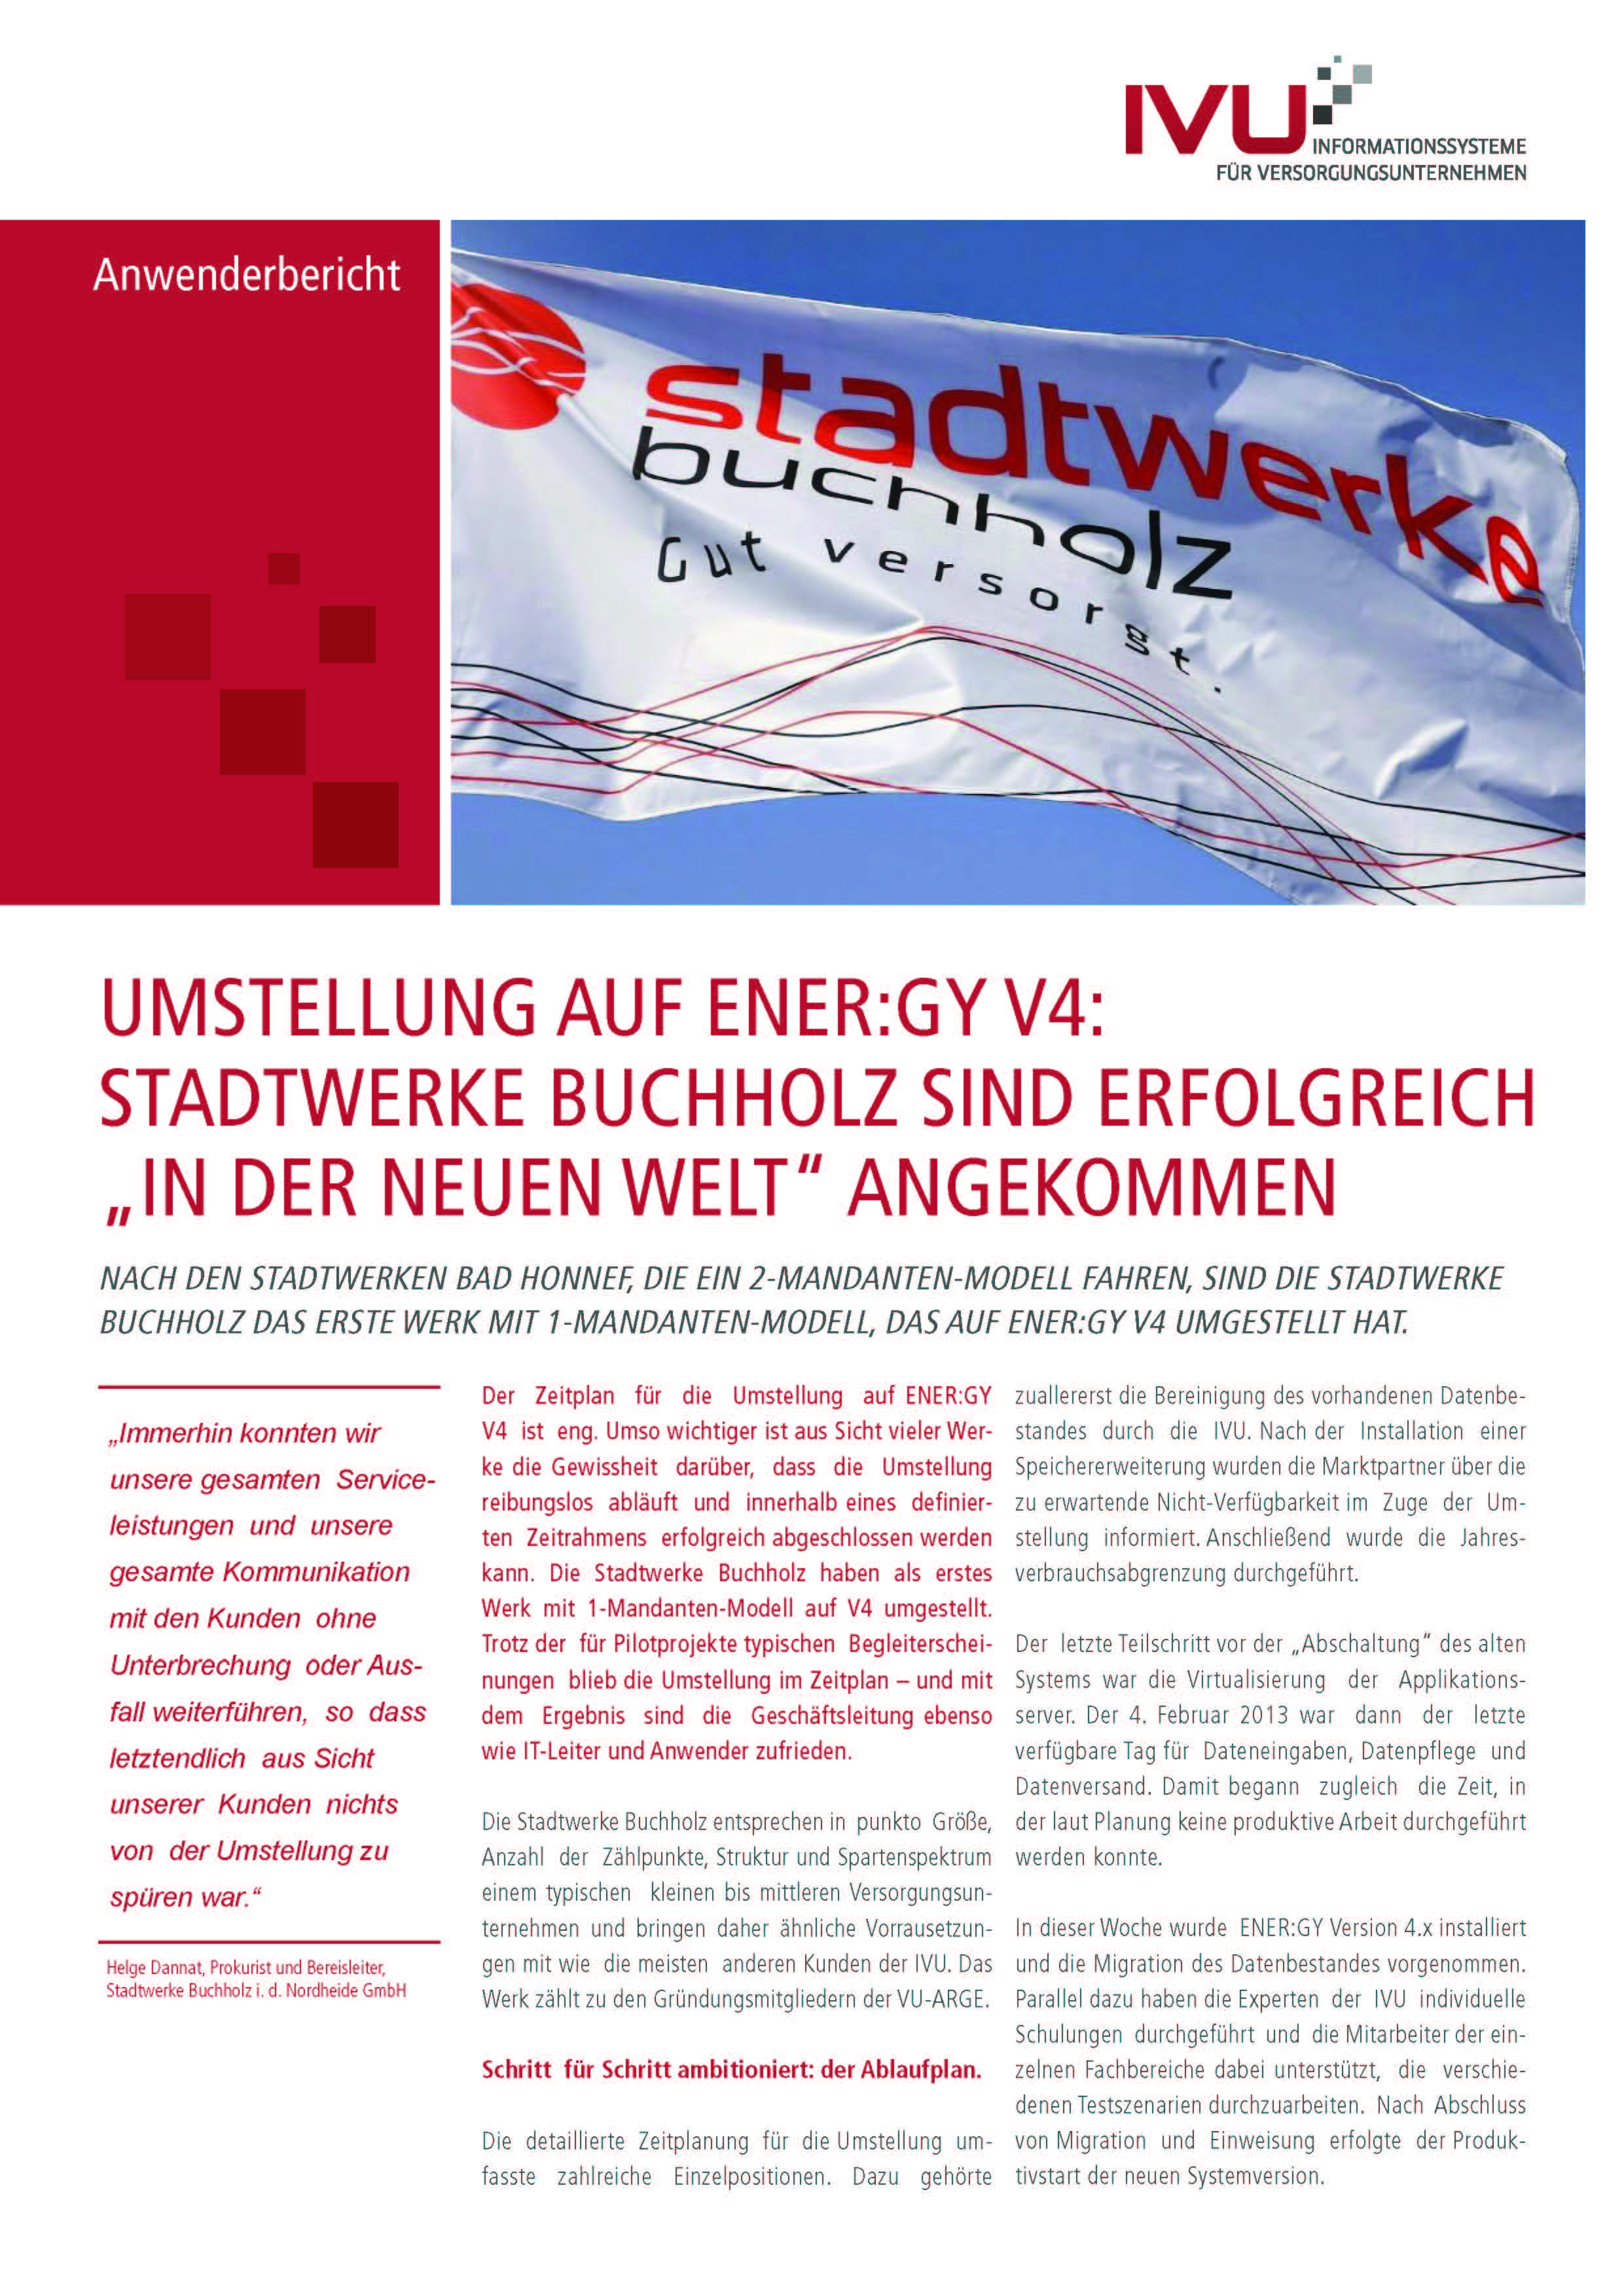 Anwenderbericht Stadtwerke Buchholz ENER:GY V4